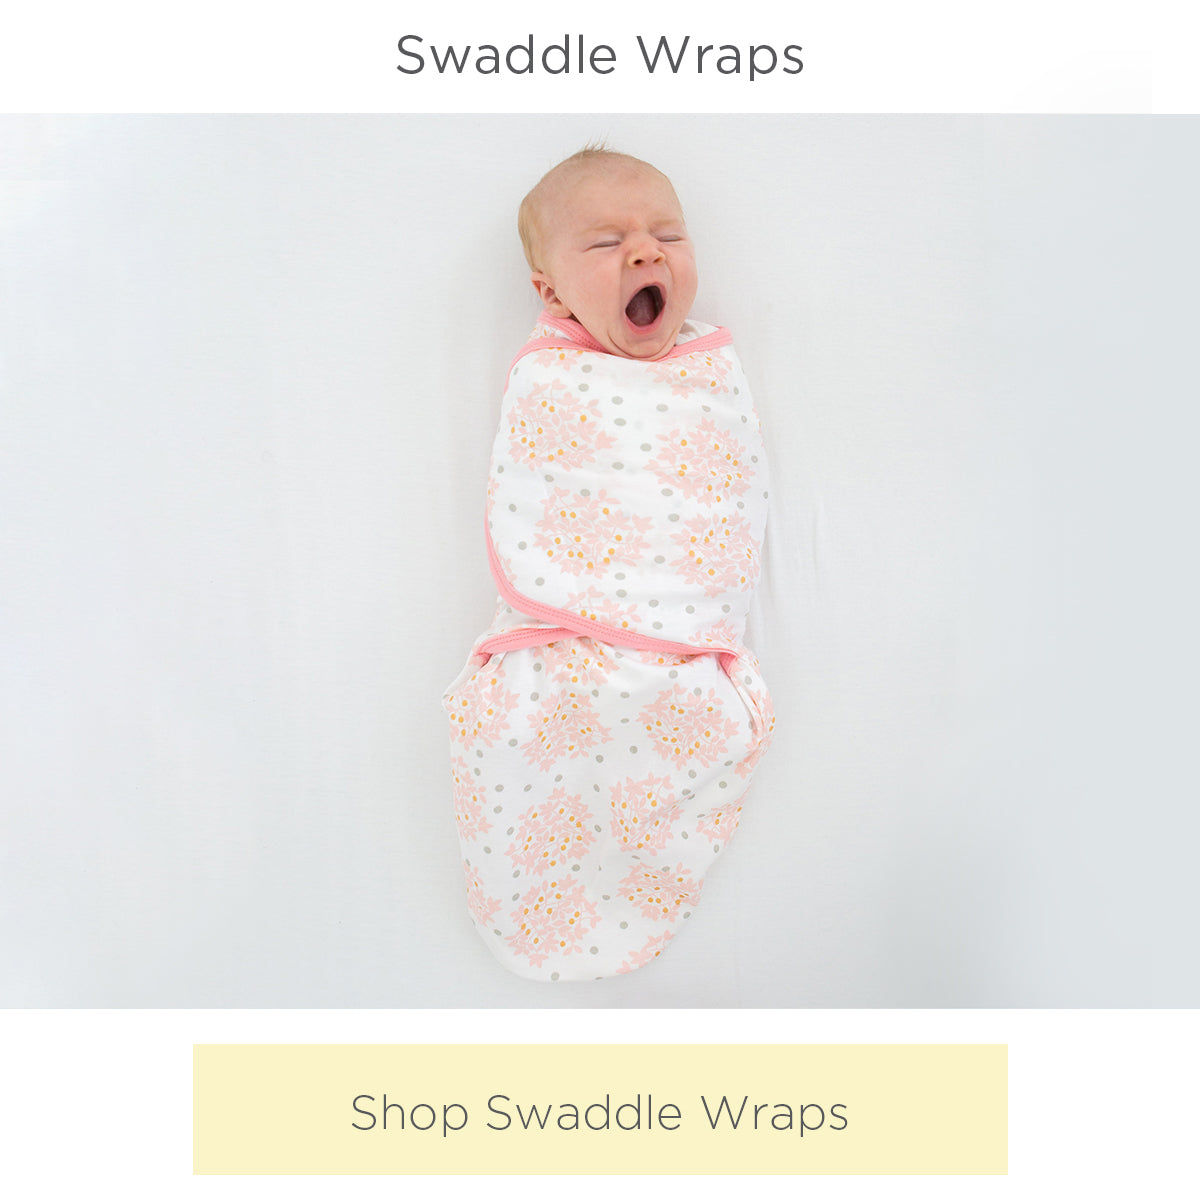 Stage 1 Safe Sleepwear Swaddle Wraps